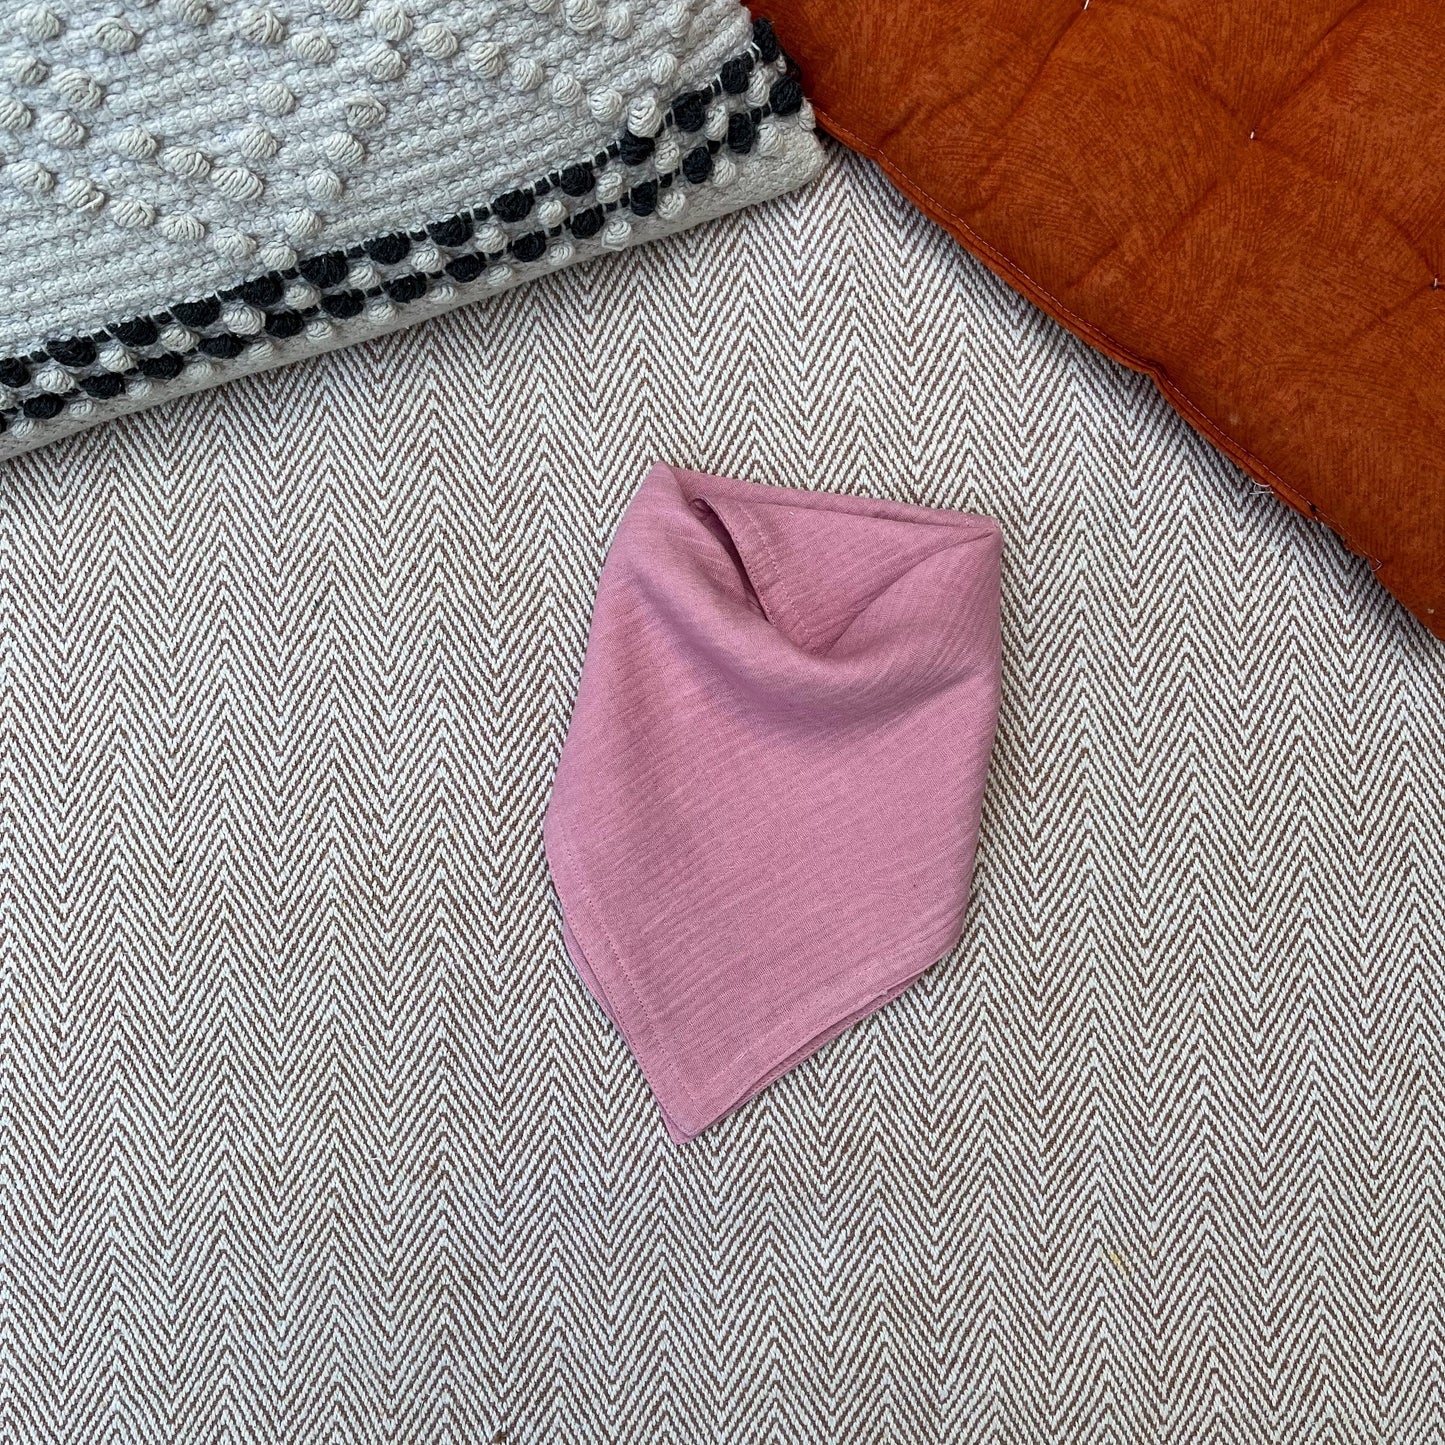 Bandana Infant Bib and Burp Cloth Set - Pink